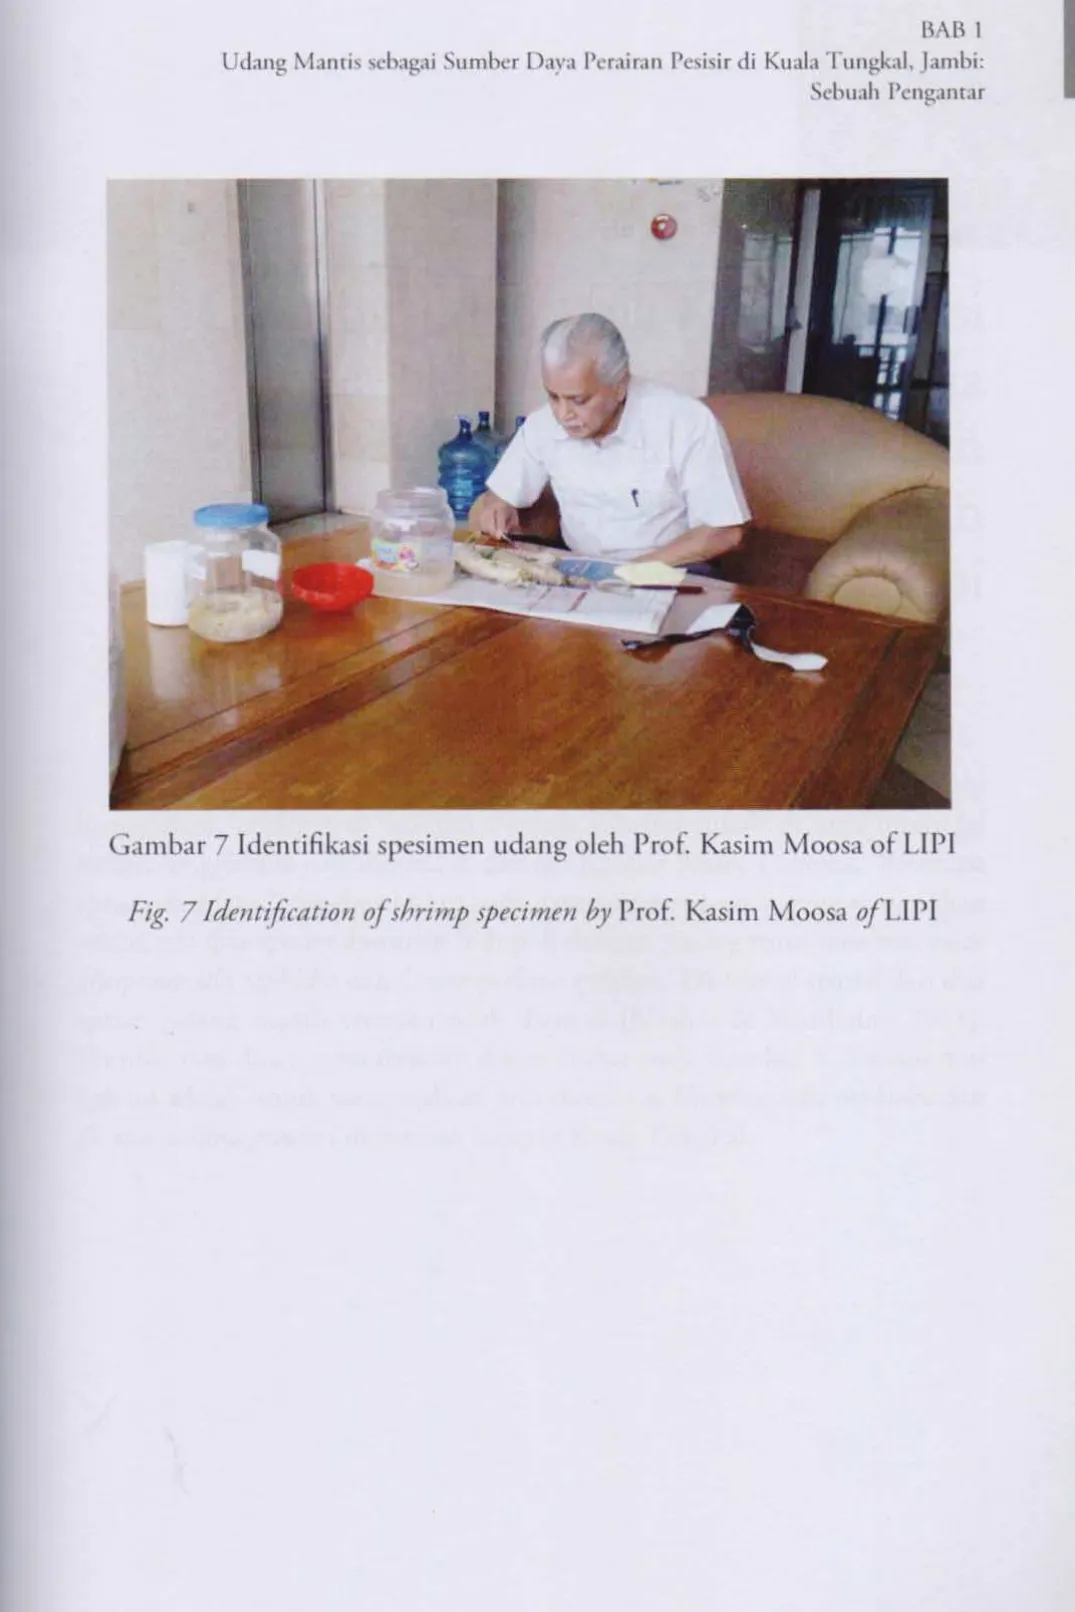 Gambar 7 Identifikasi spesirnen udang oleh Prof. Kasirn Moosa of LIPI 